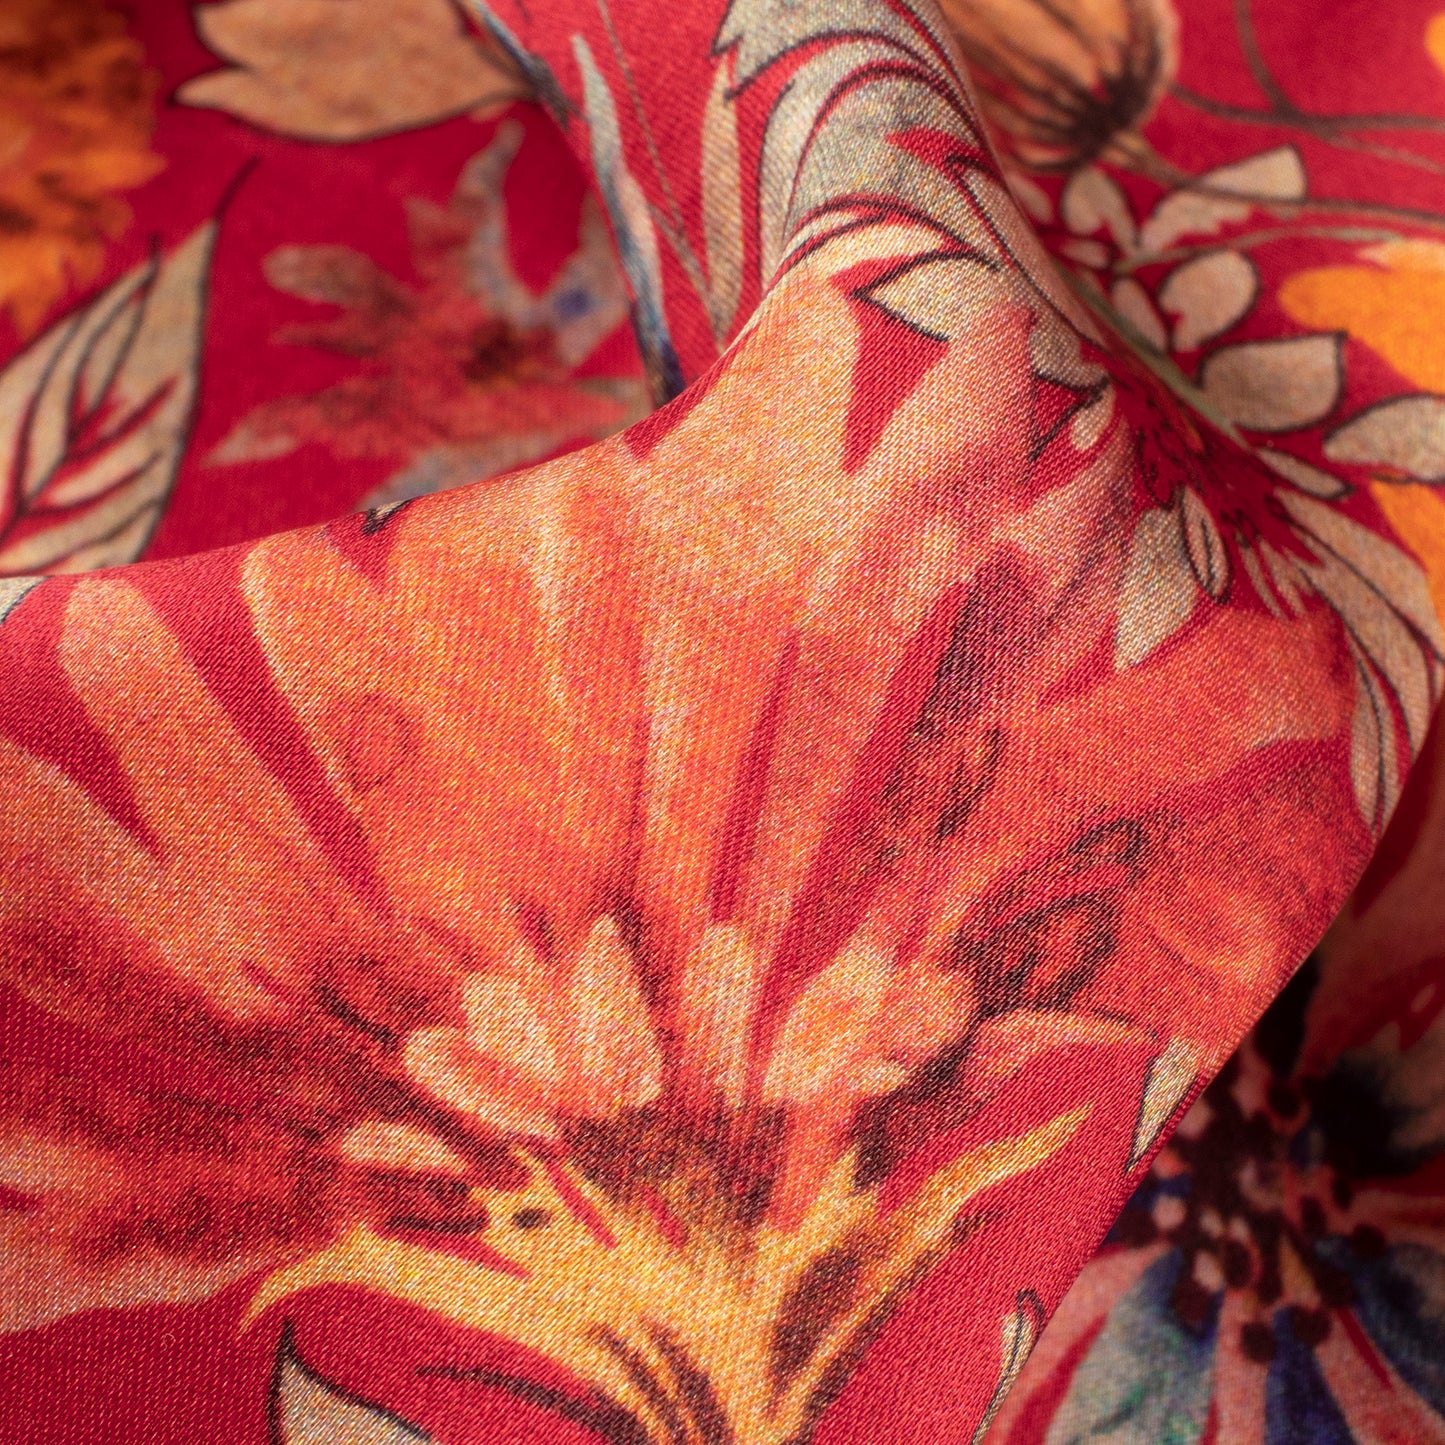 Red Floral Digital Print Assami Bemberg Satin Fabric